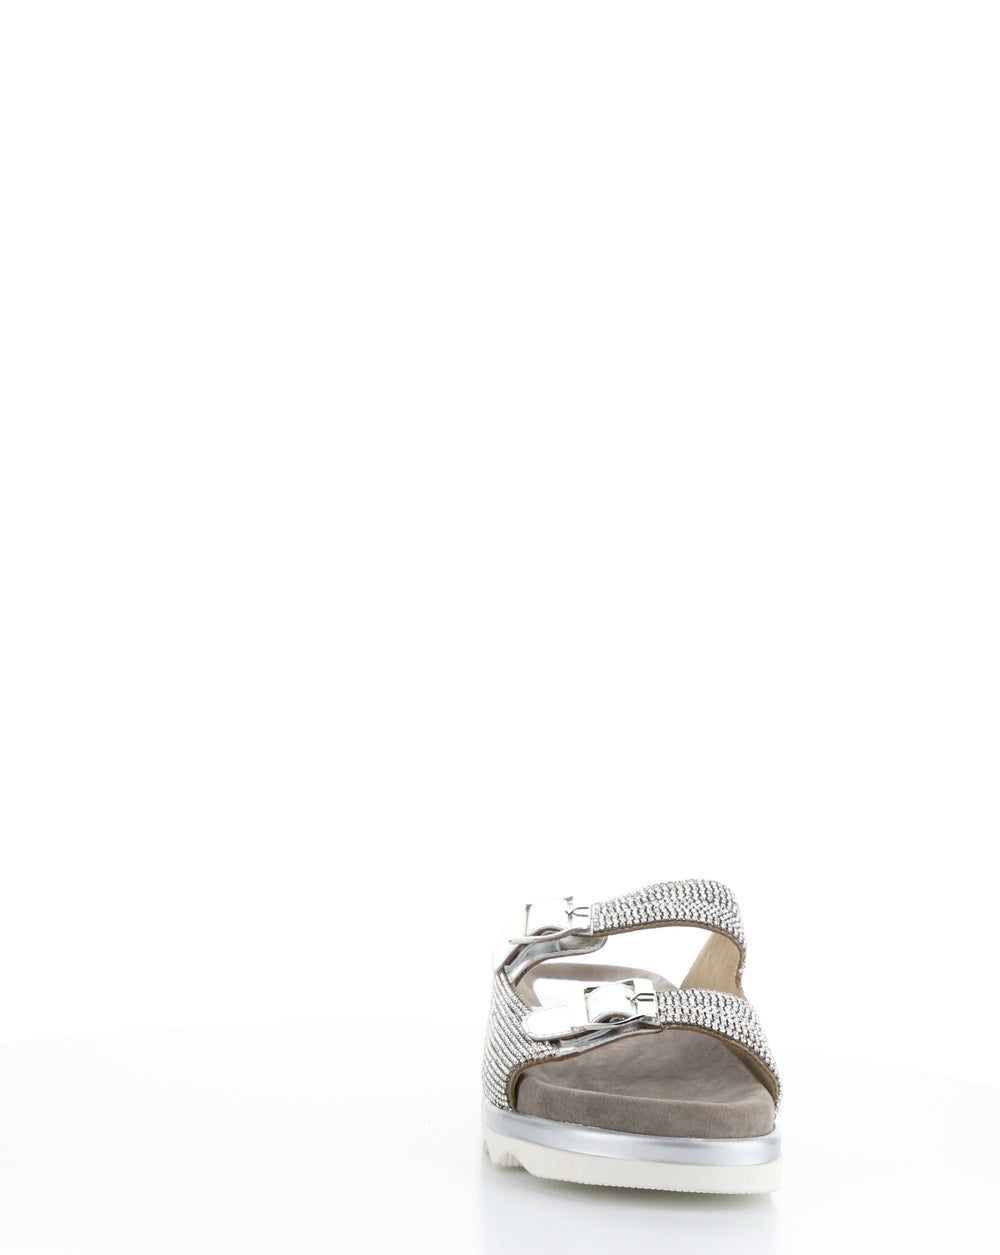 DAHNA SILVER Slip-on Sandals